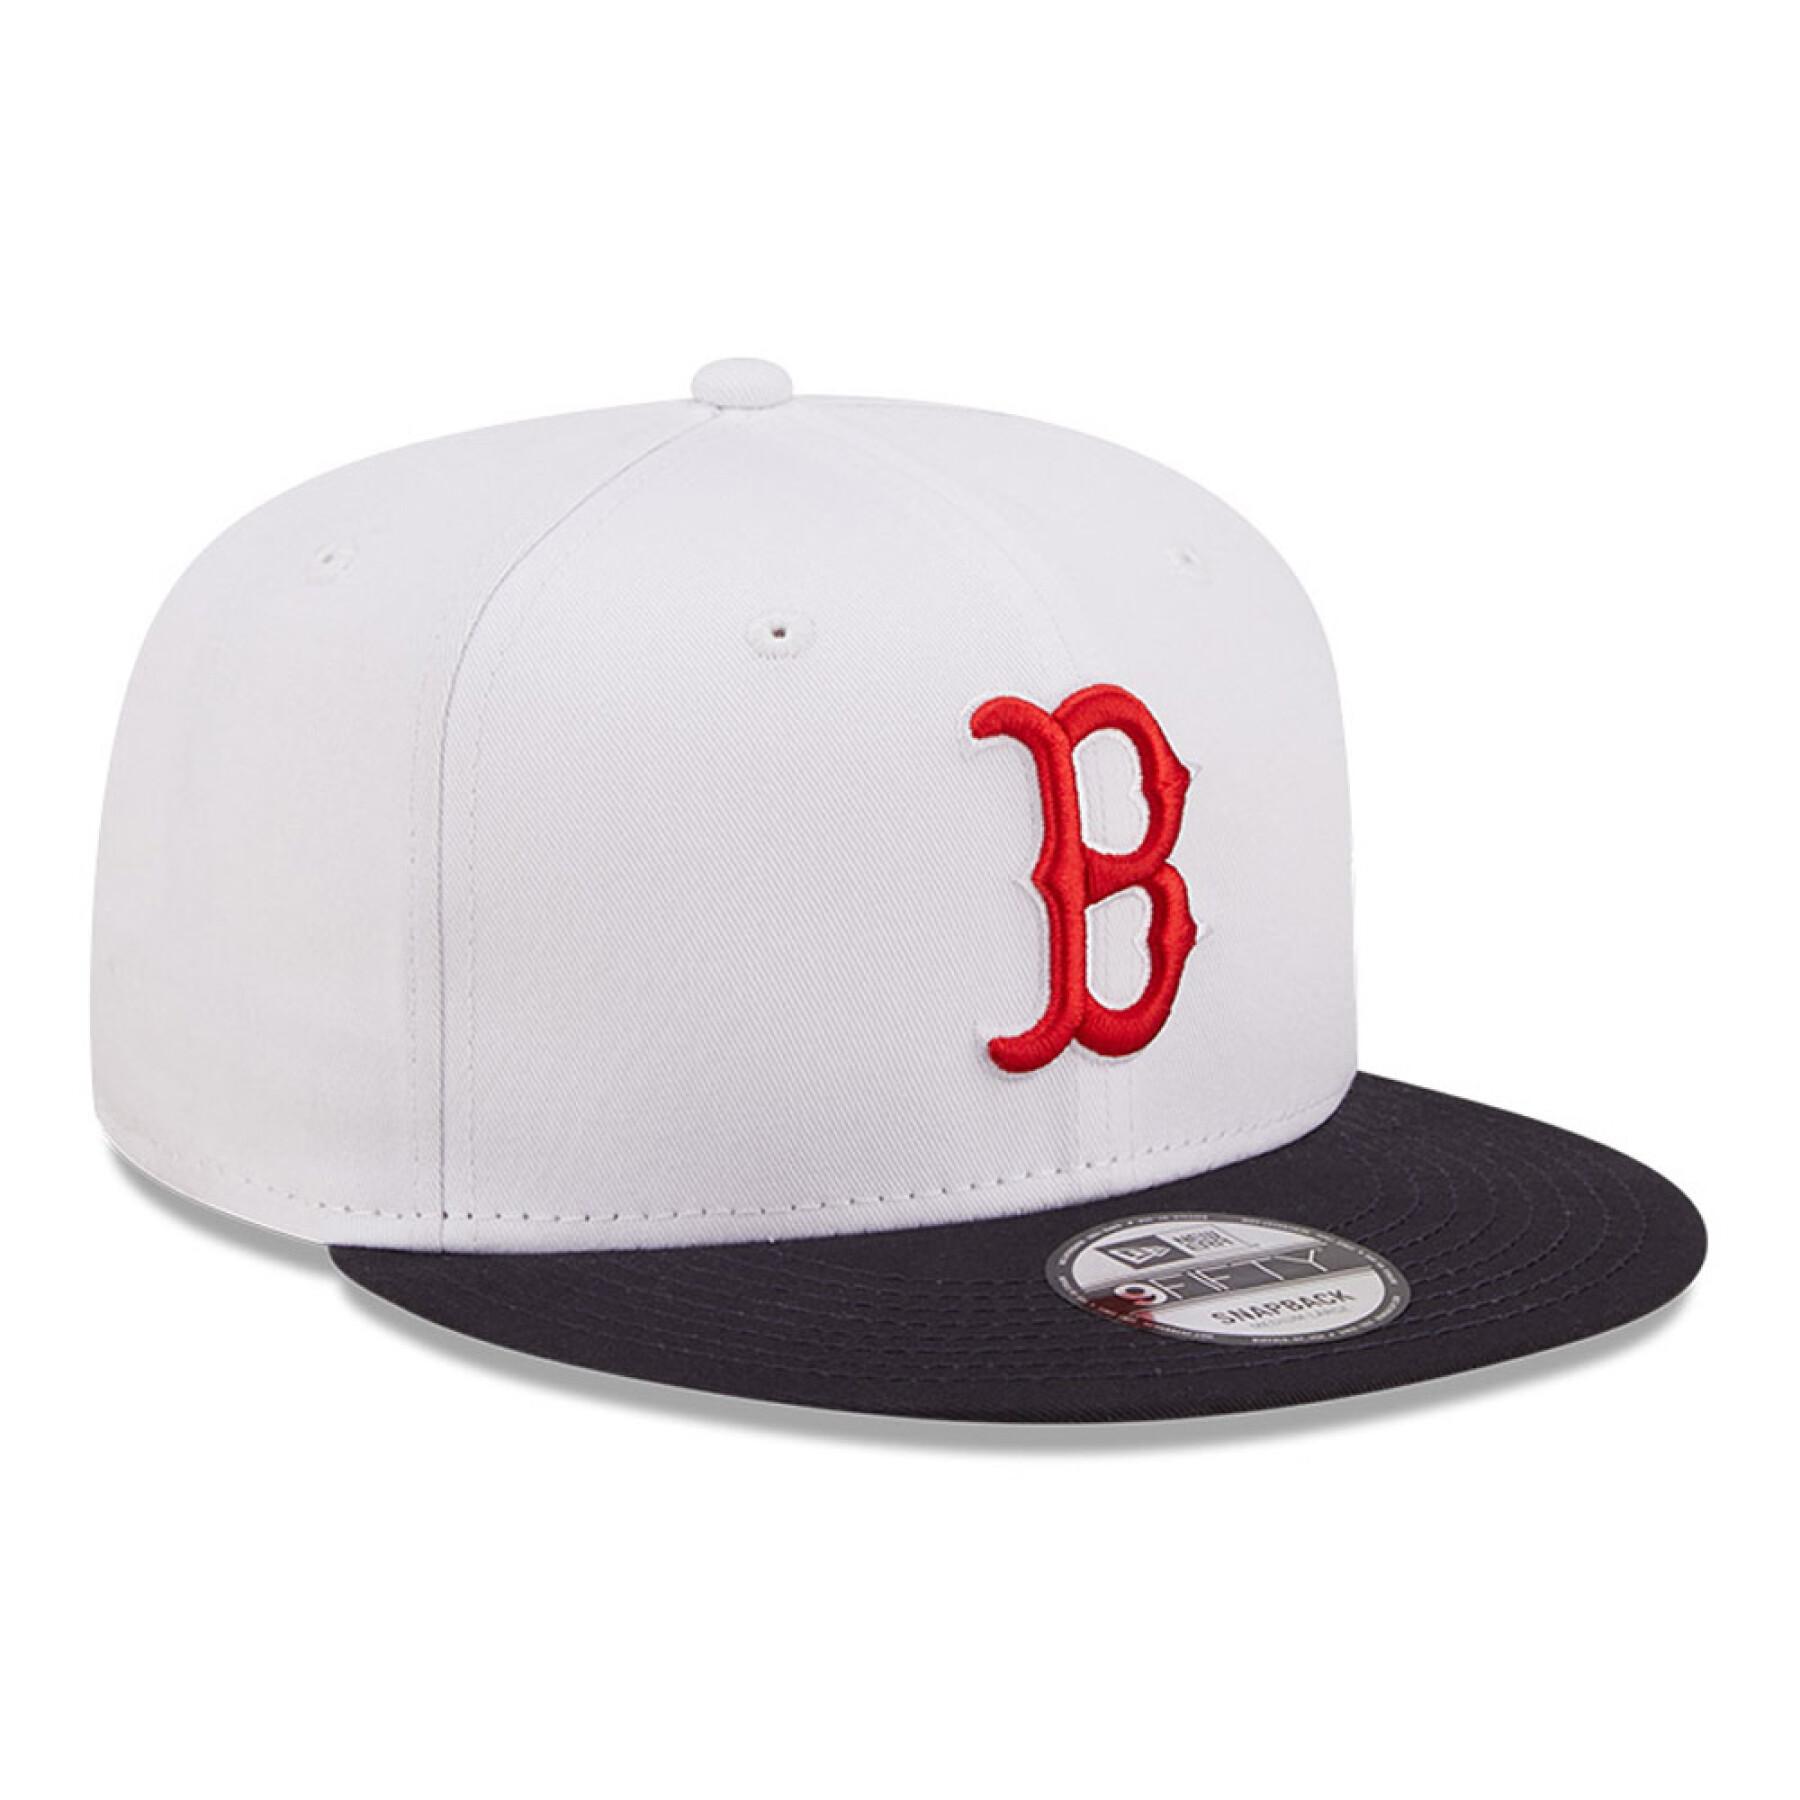 Gorra 9fifty New Era Boston Red Sox